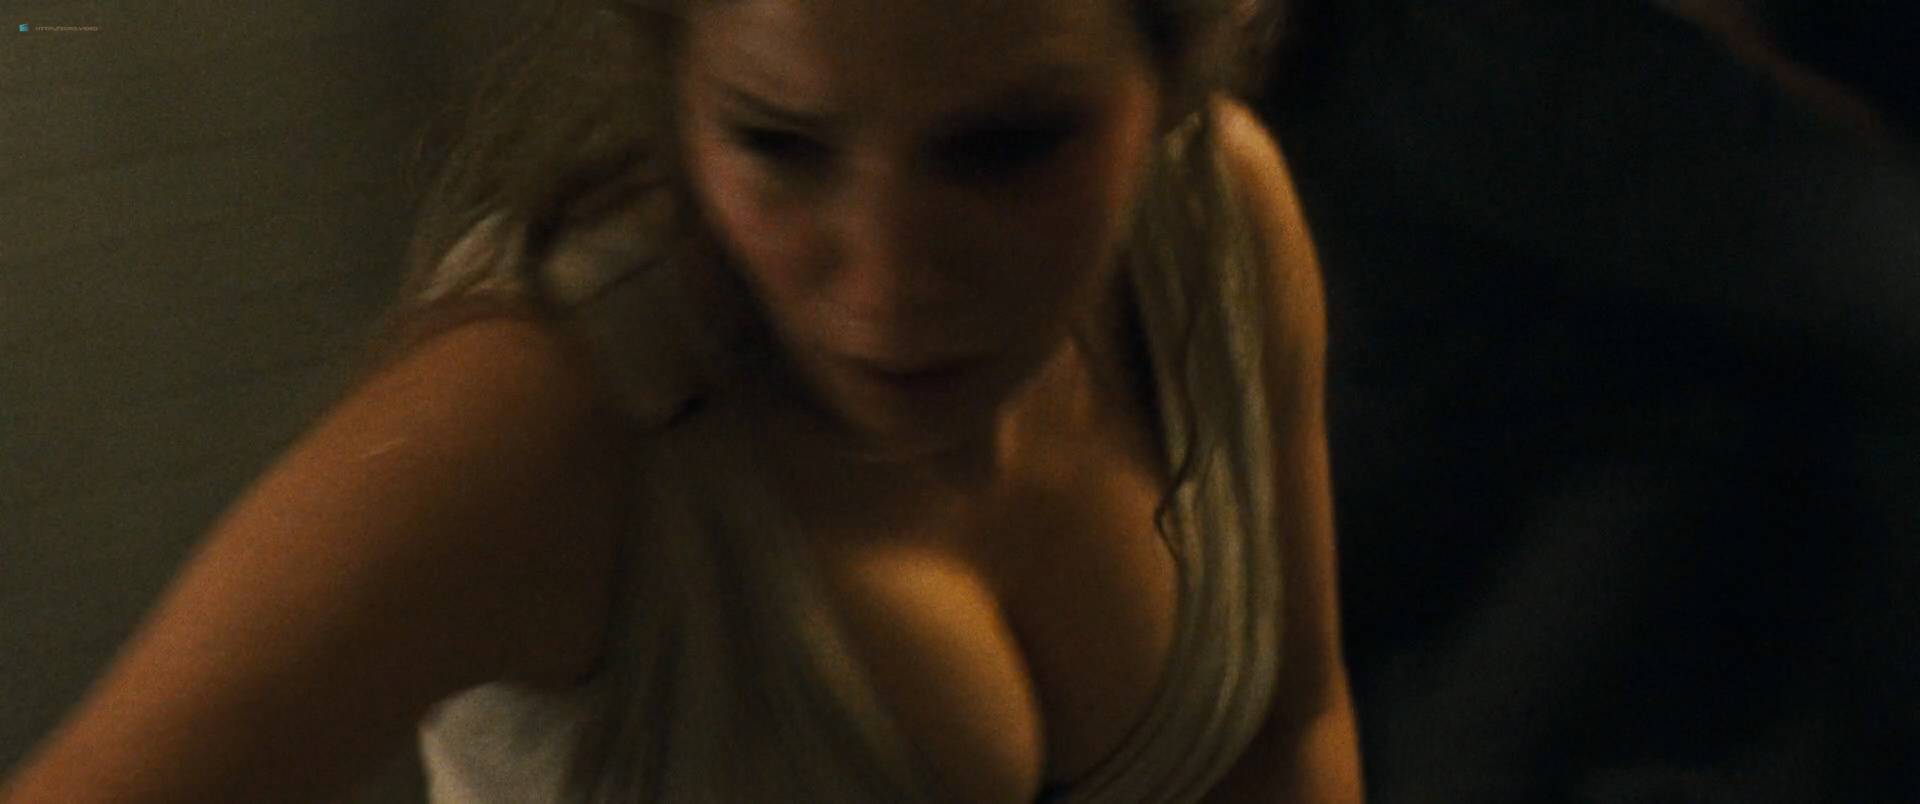 Nude mother jennifer lawrence Jennifer Lawrence